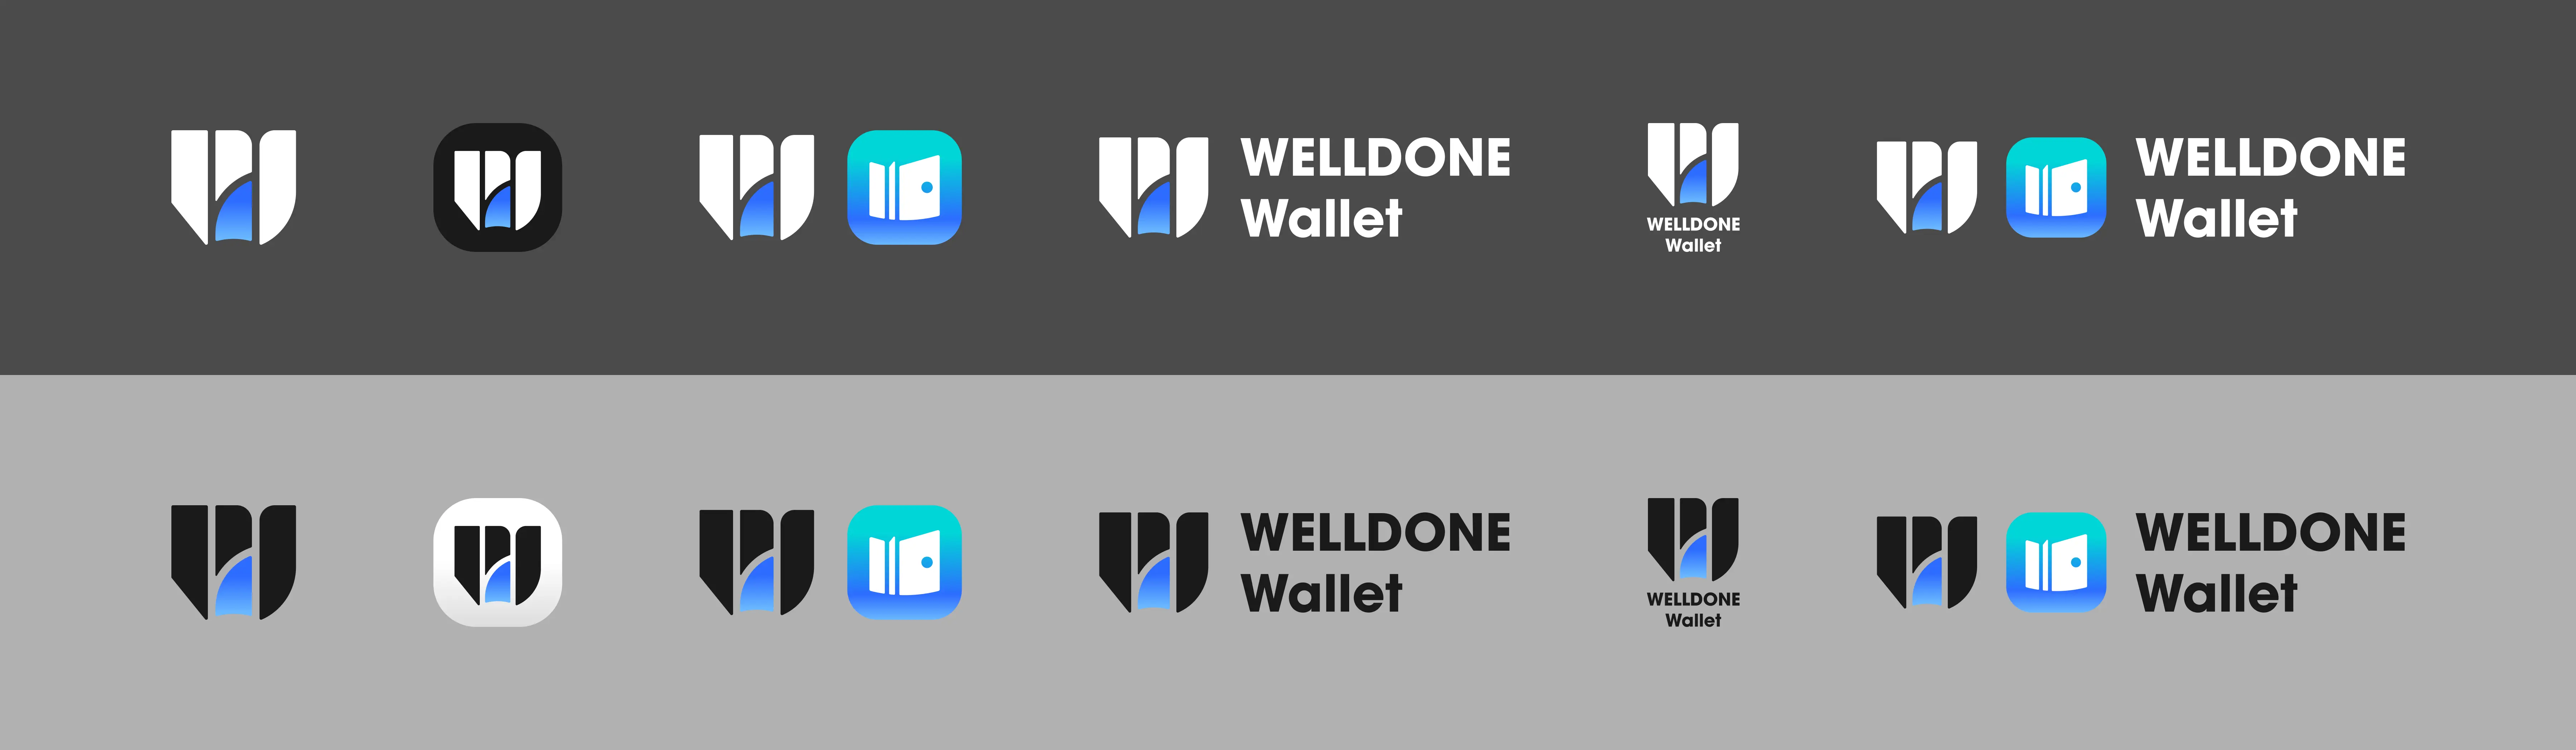 wallet brand kit